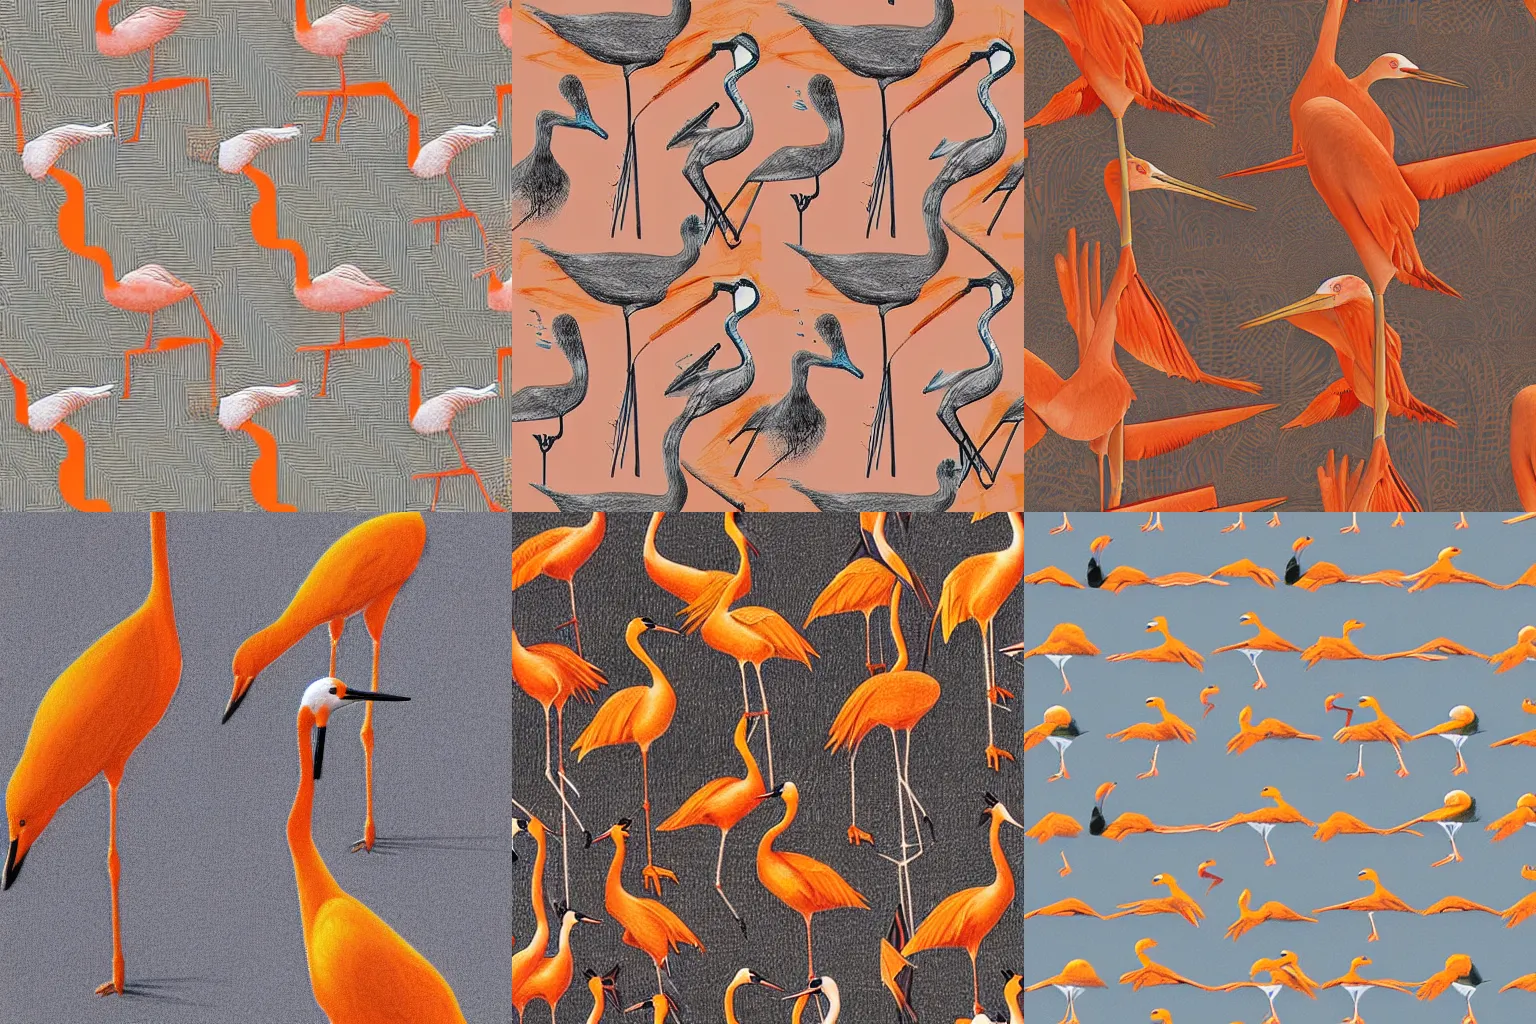 Prompt: seamles pencil drawing of many cranes, wallpaper, texture, orange pastel colors